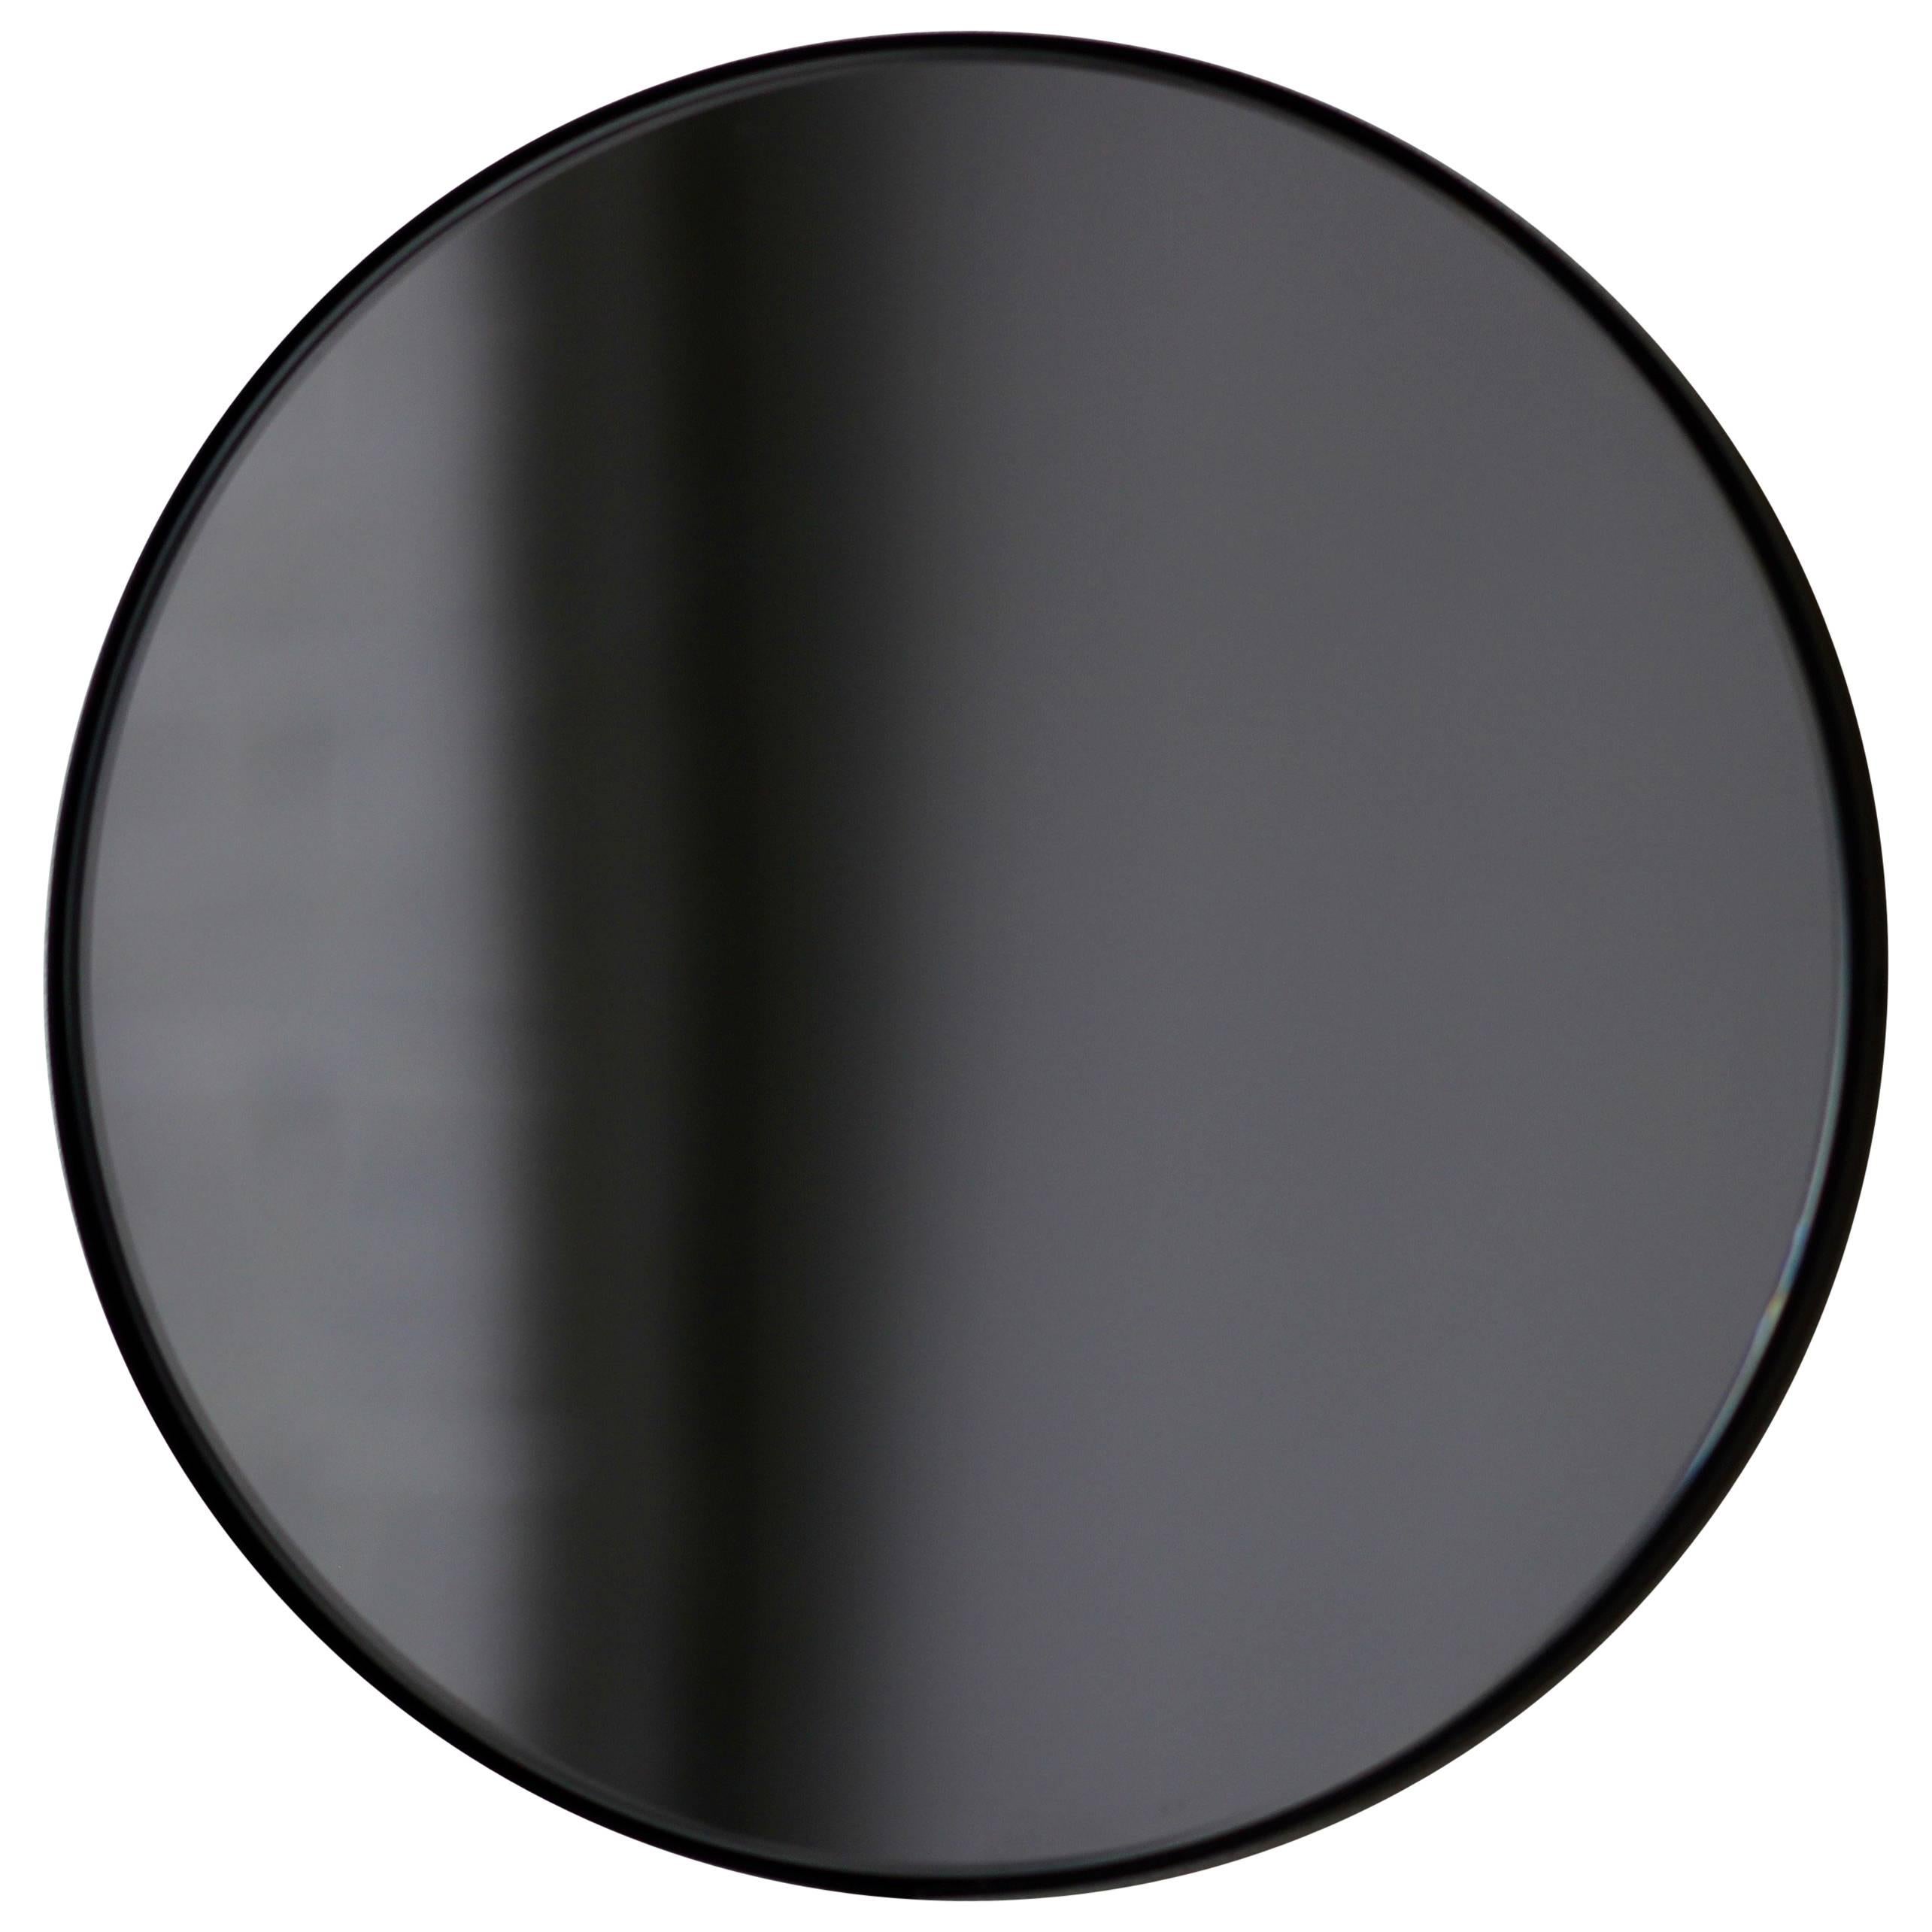 Orbis Black Tinted Art Deco Round Mirror with Black Frame, Medium For Sale